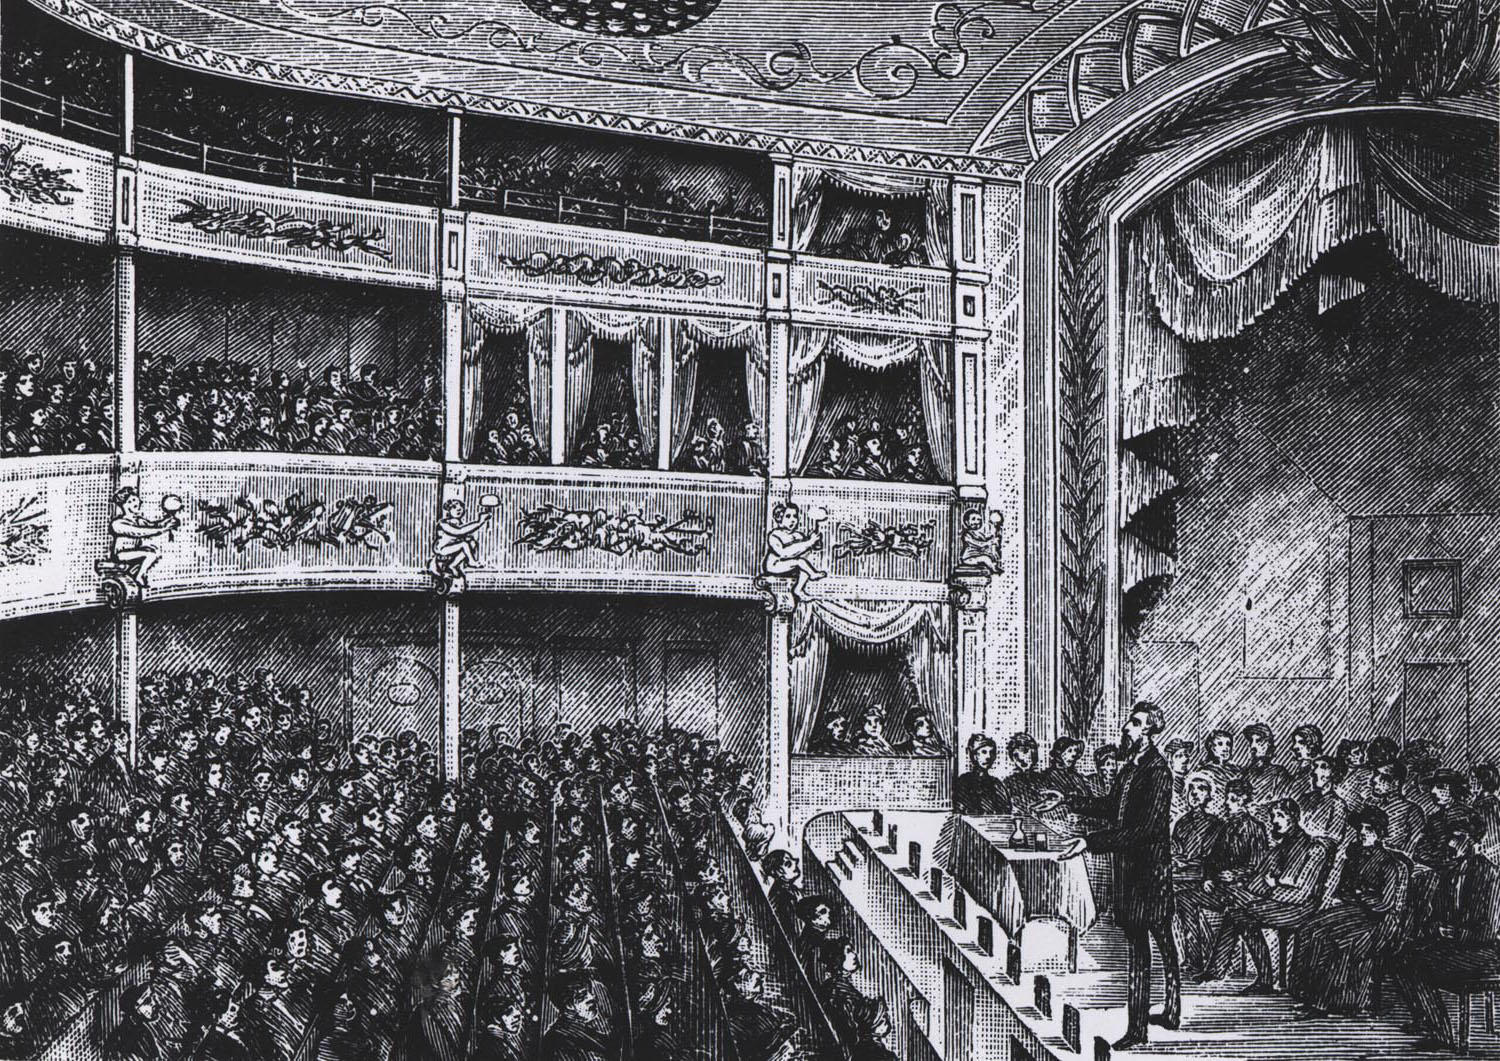 William Booth preaching in the Effingham Theatre